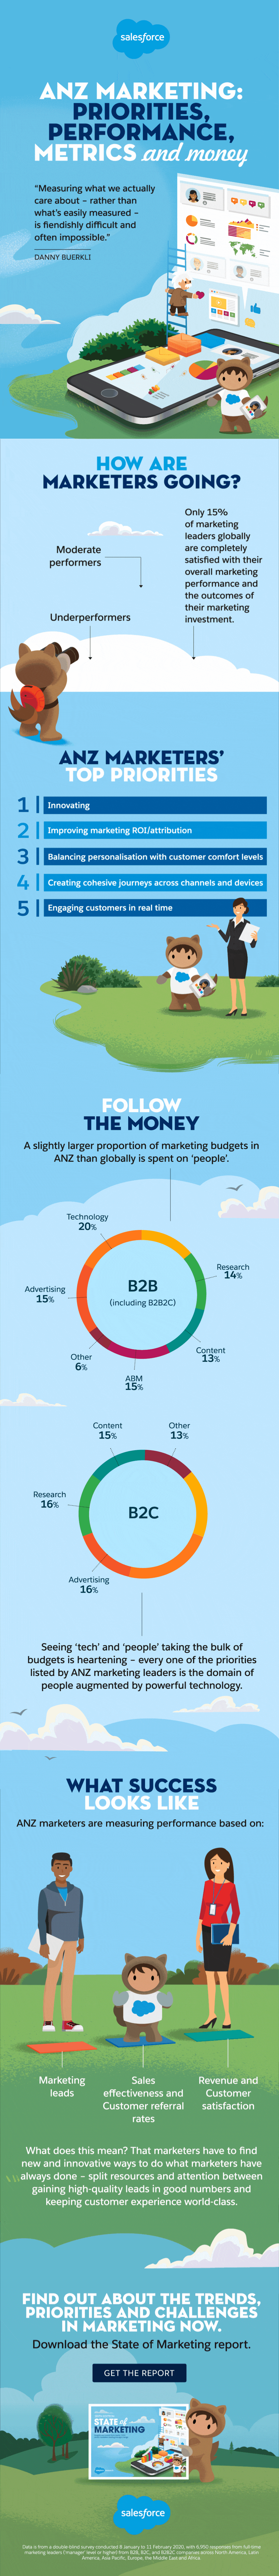 ANZ Marketing: Priorities, Performance, Metrics and Money